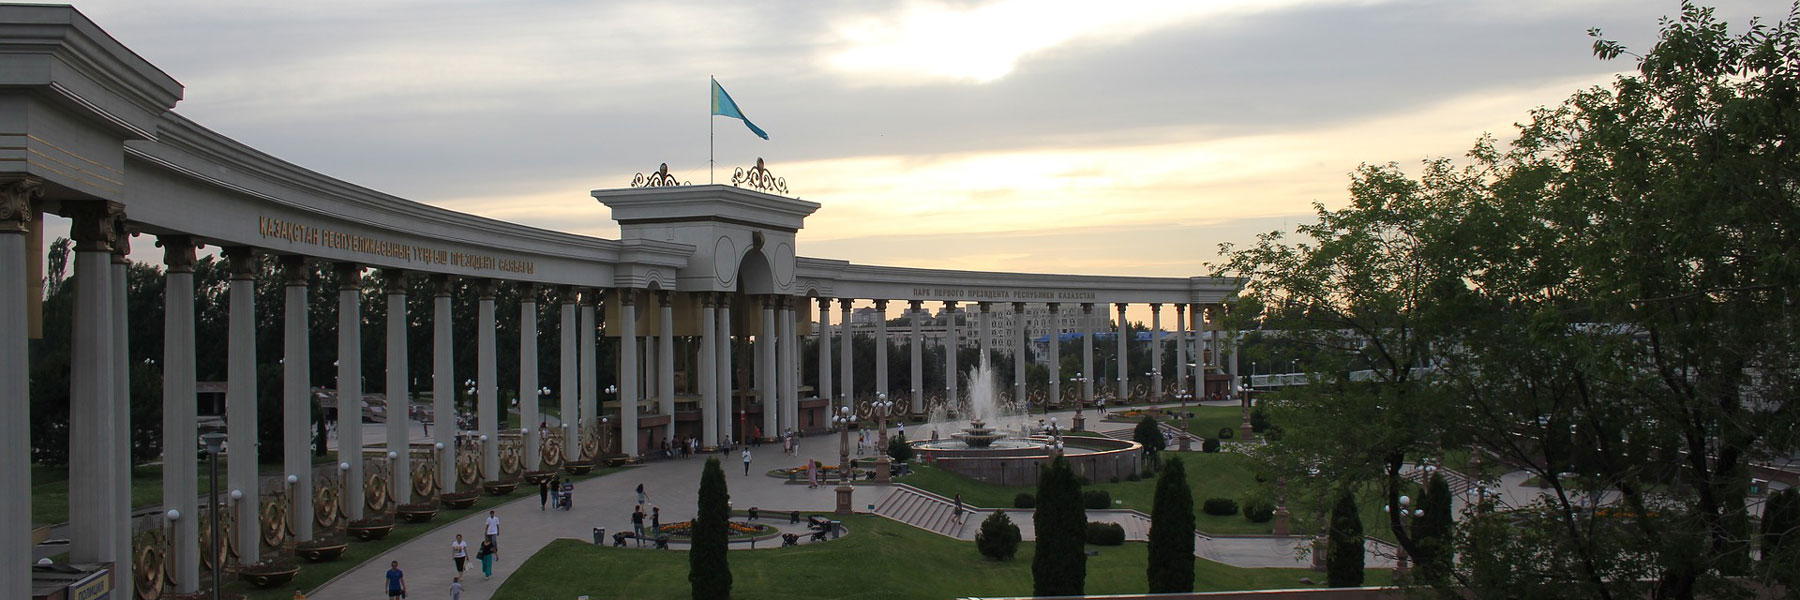 semicircular building in Almaty